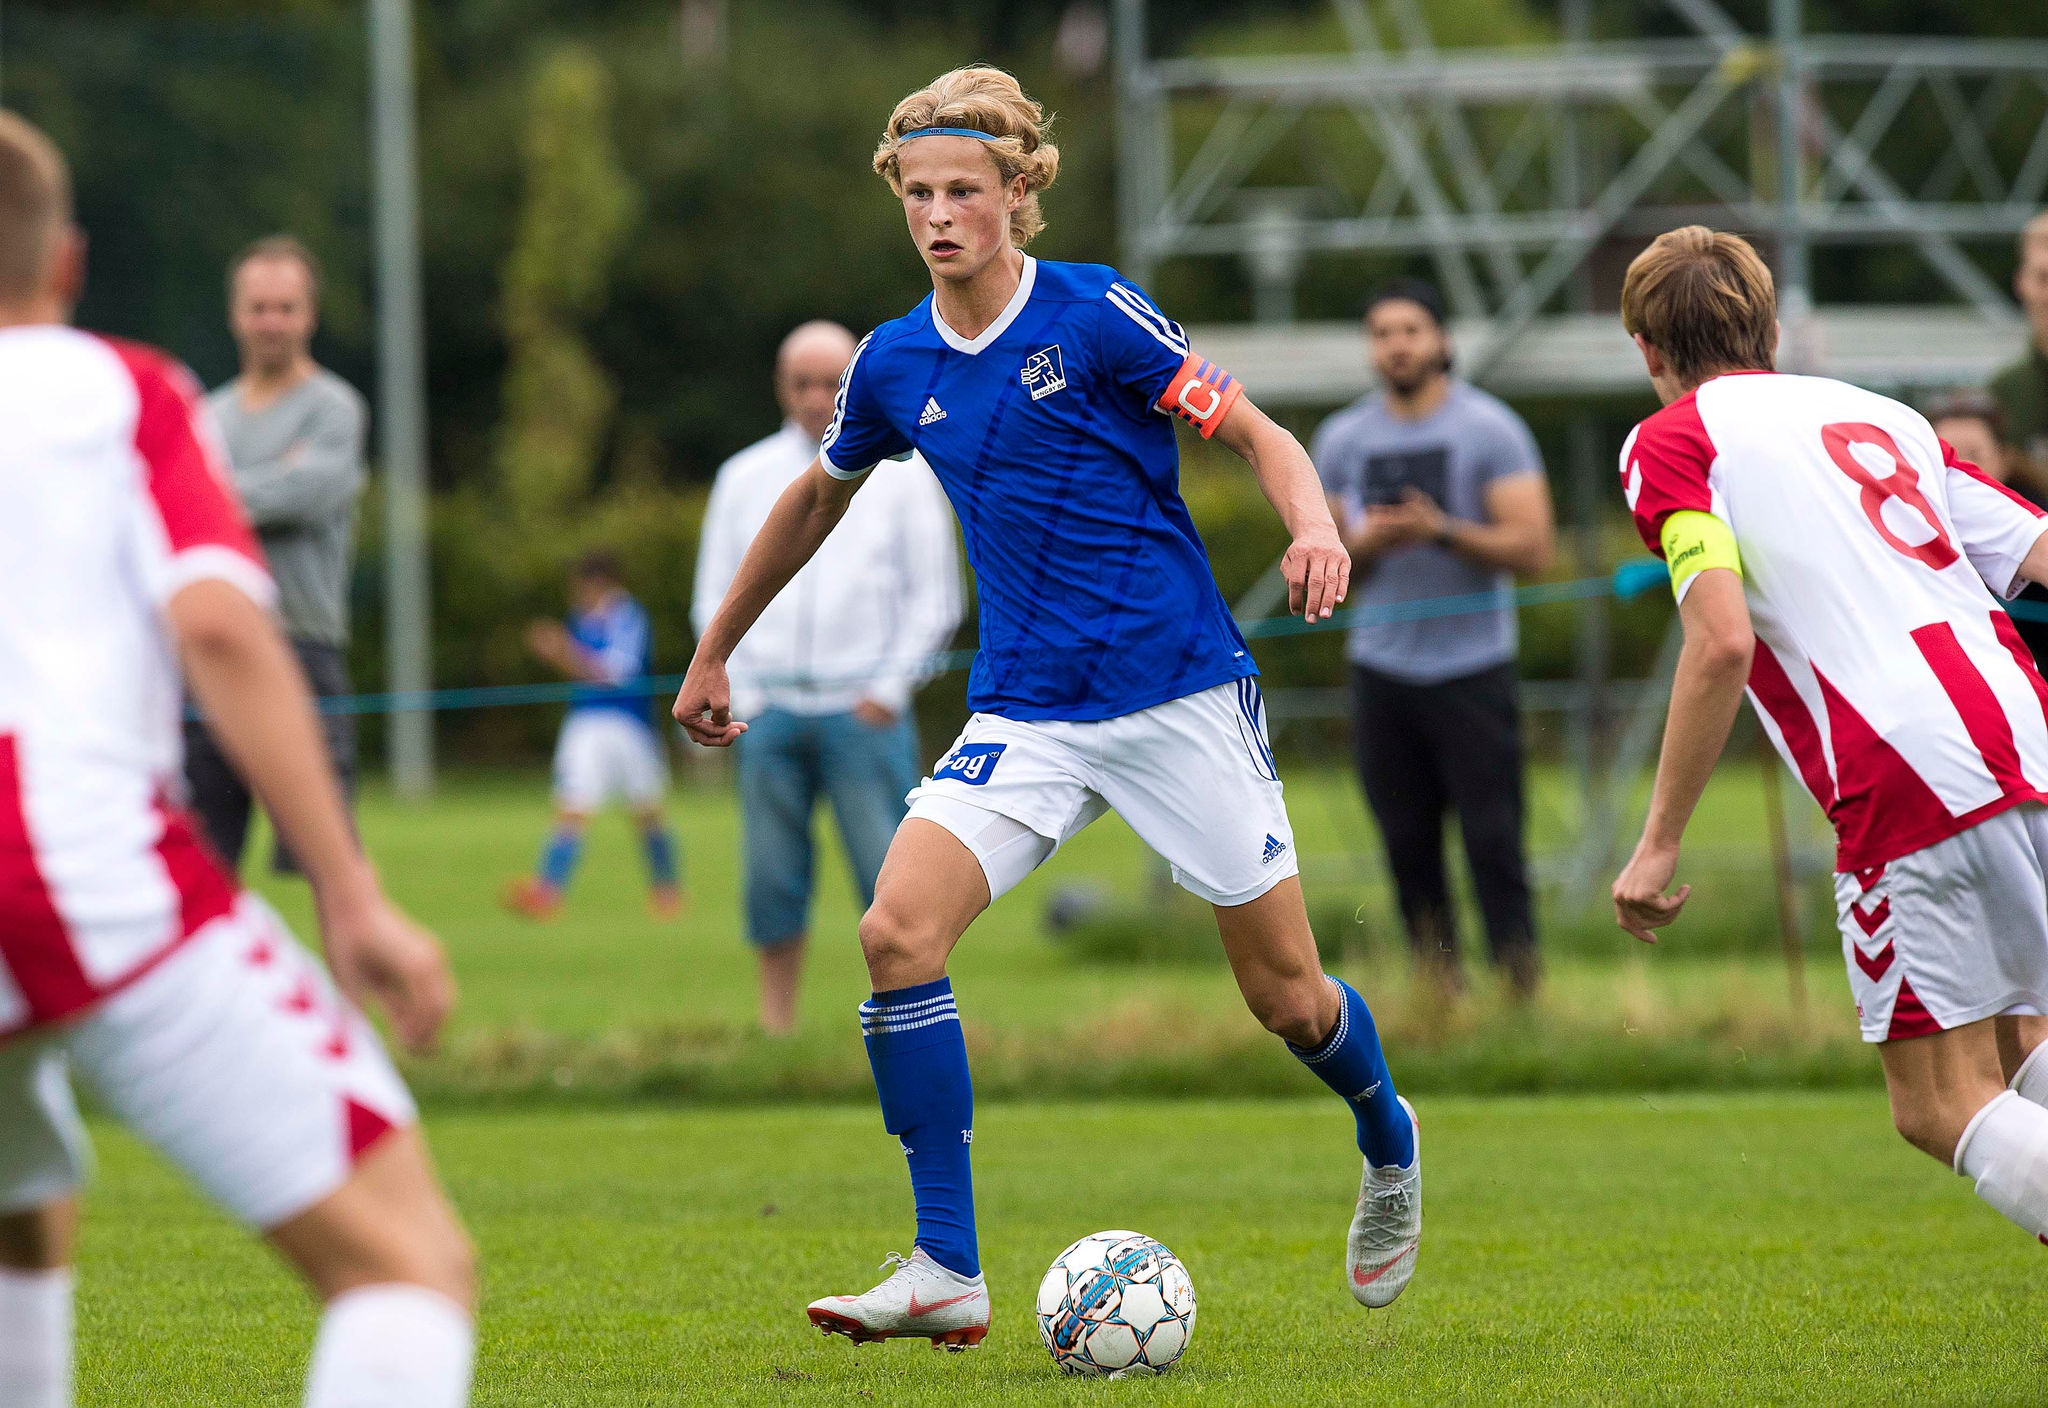 Maurits i aktion for Lyngby Bolkdlubs u17-hold i august 2018. Foto: ©Per Kjærbye